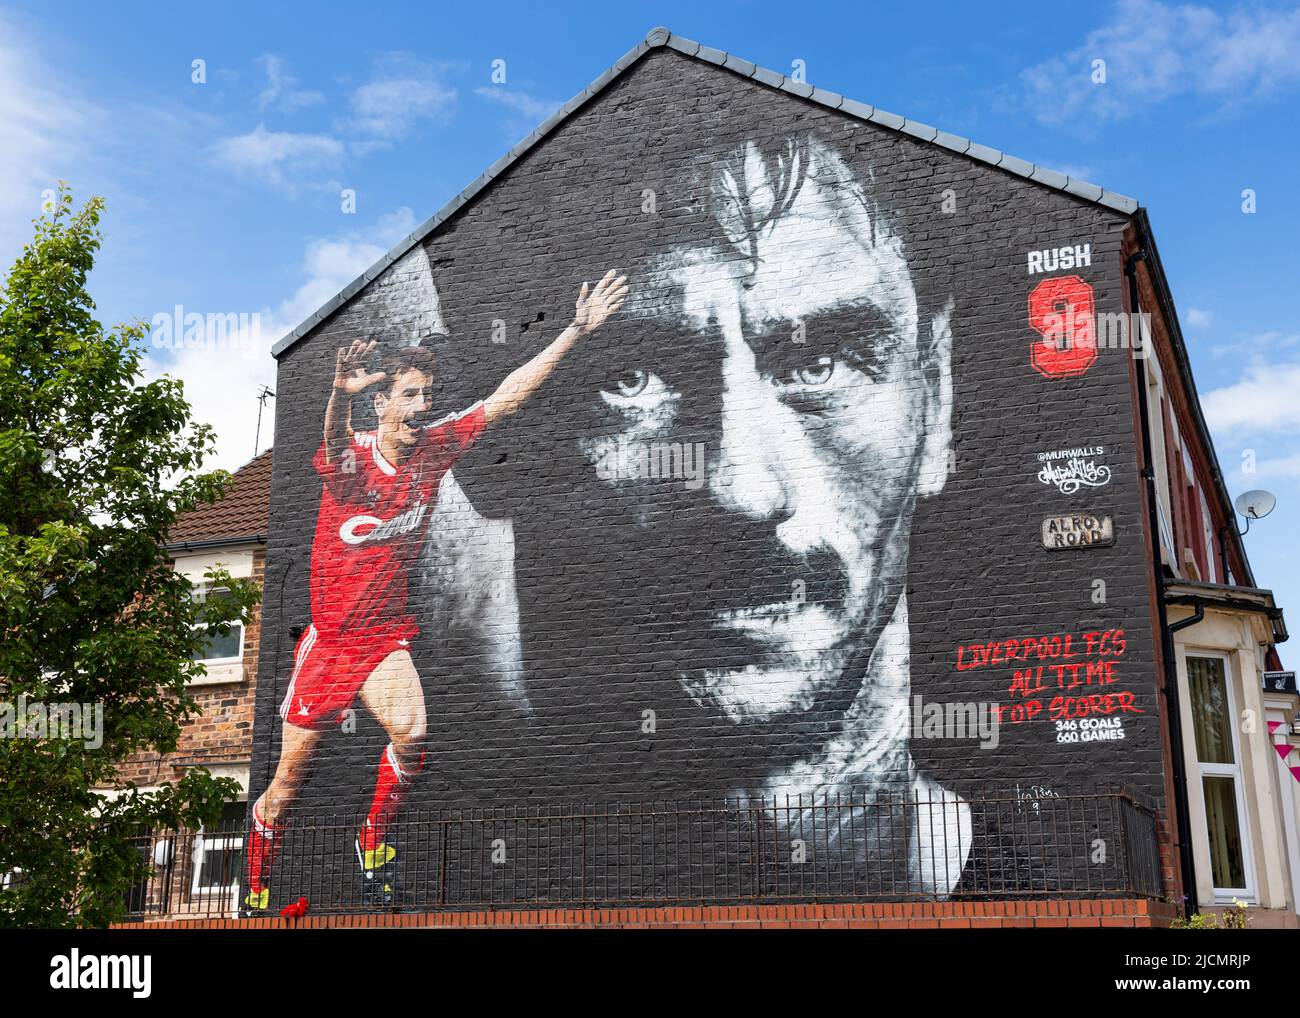 Ian Rush Wandbild, Liverpool FC Street Art, Anfield, Liverpool, England,  Großbritannien Stockfotografie - Alamy